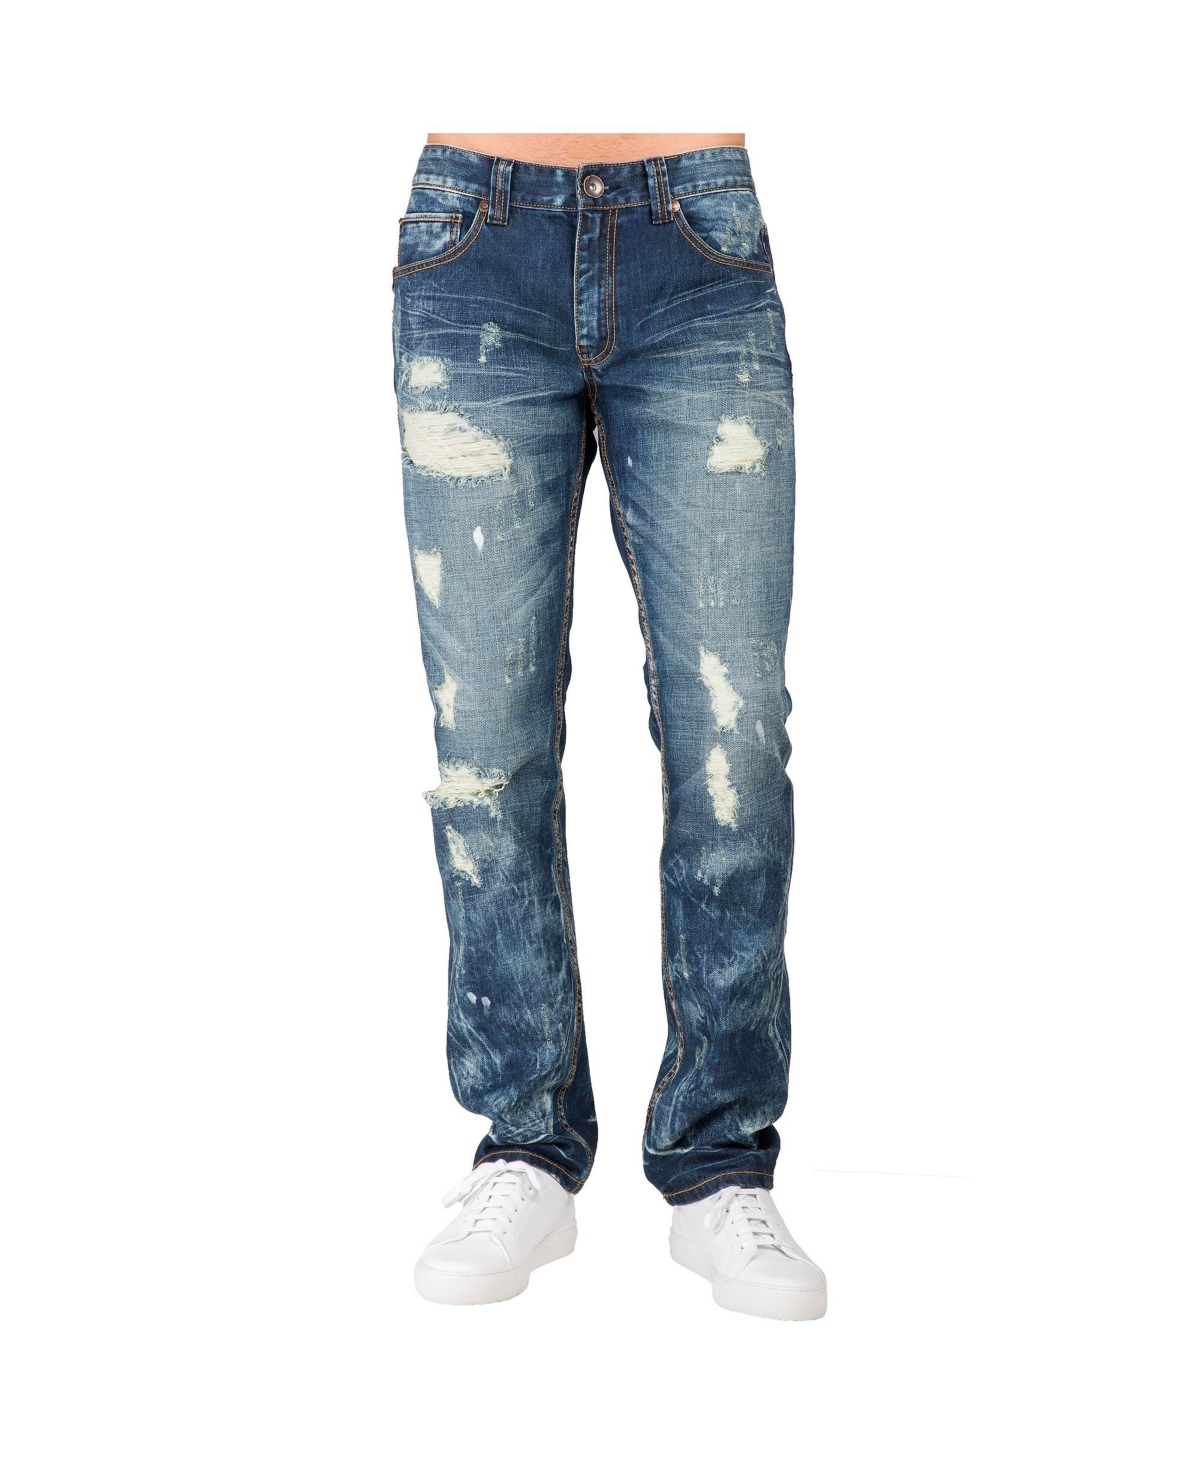 Men's Slim Straight Fit Denim Ripped Distressed Jeans - Battered blue